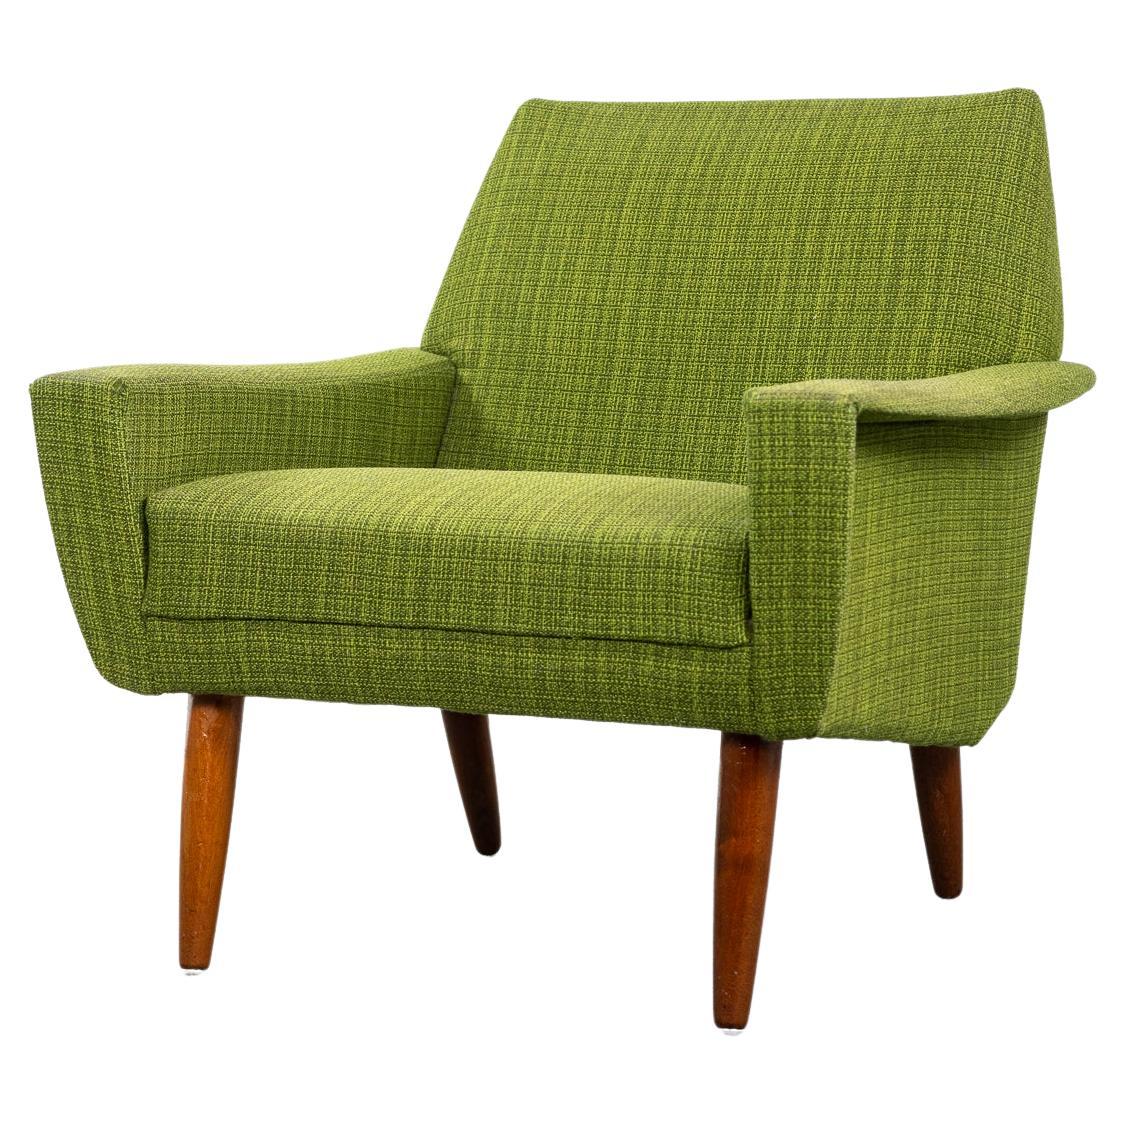 Danish Mid-Century Modern Upholstered Teak Lounge Chair